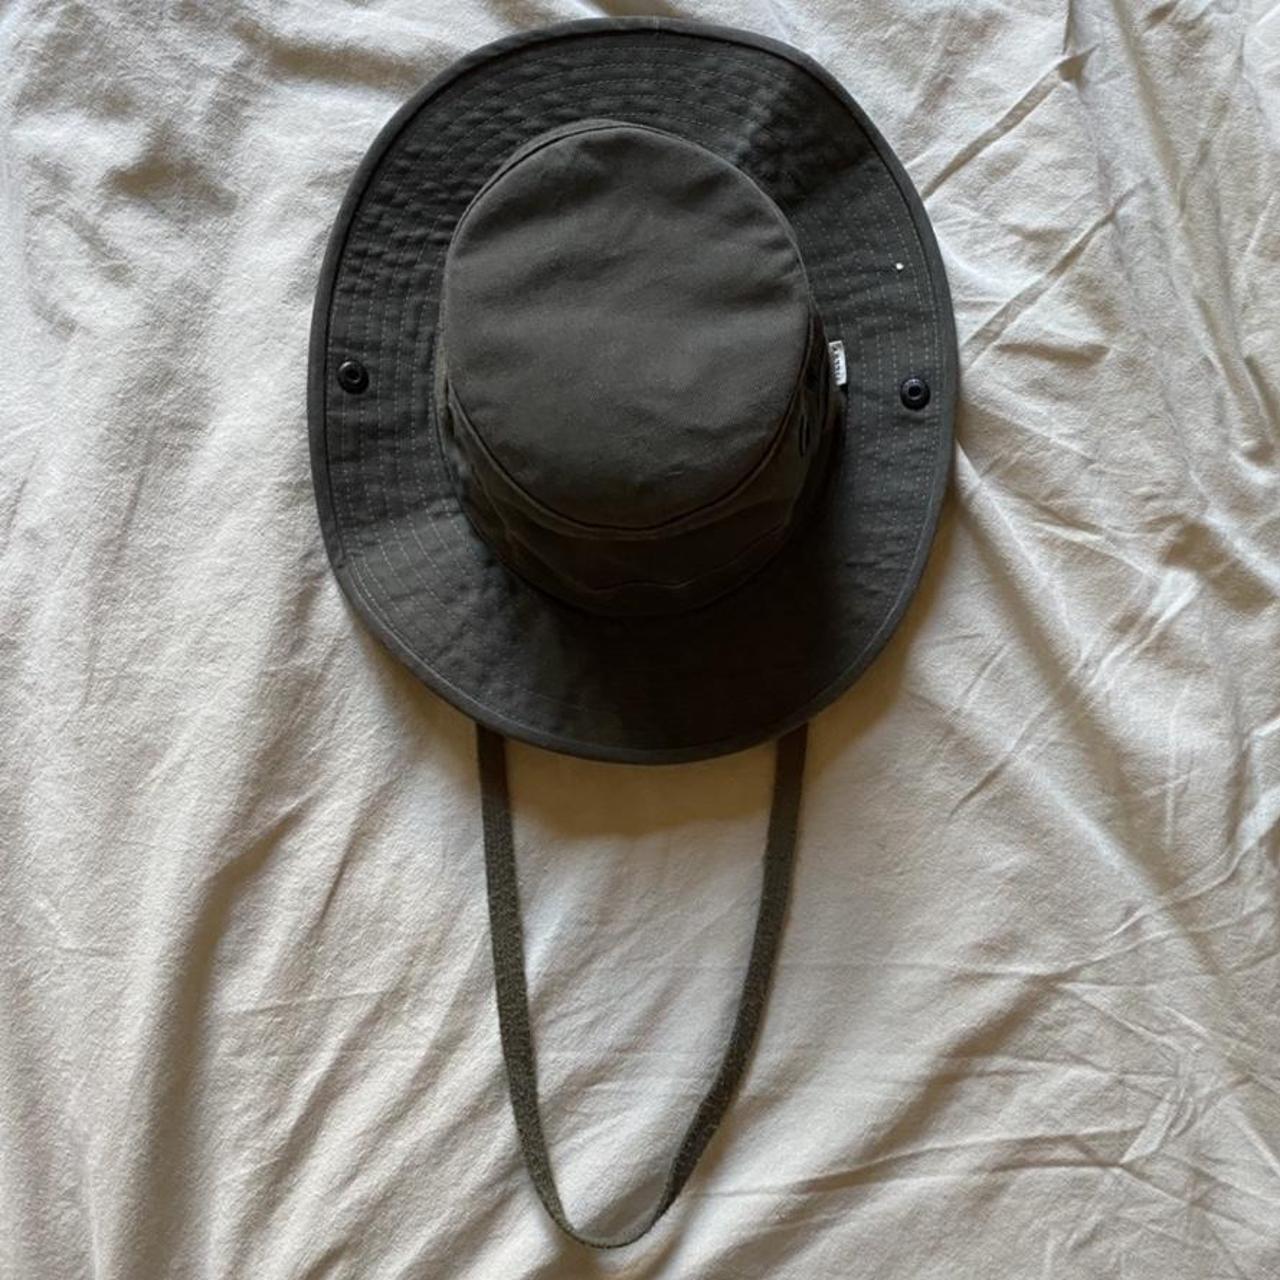 Tilley Women's Wanderer Brim Hat